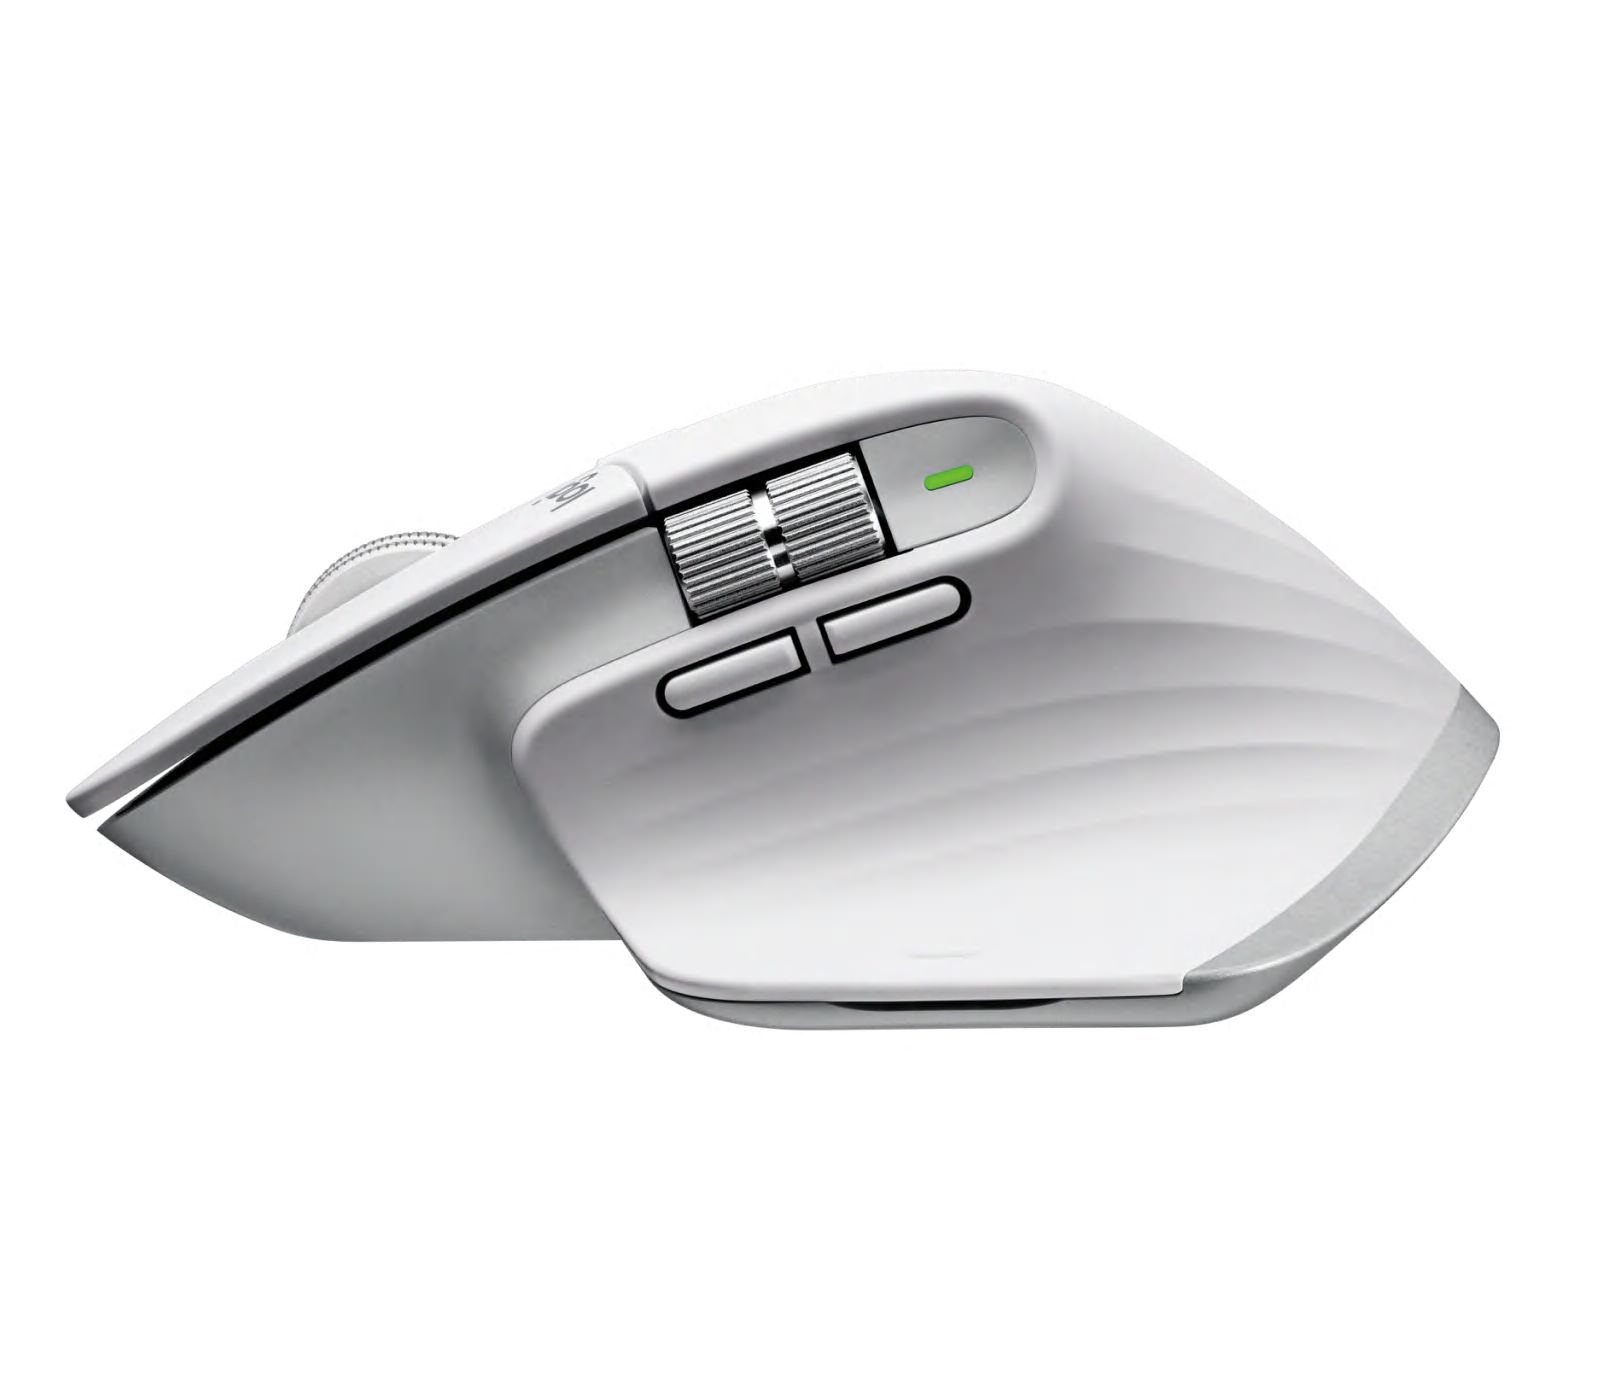 MX Master 3s Wireless Mouse - 8K Optical Sensor | Logitech